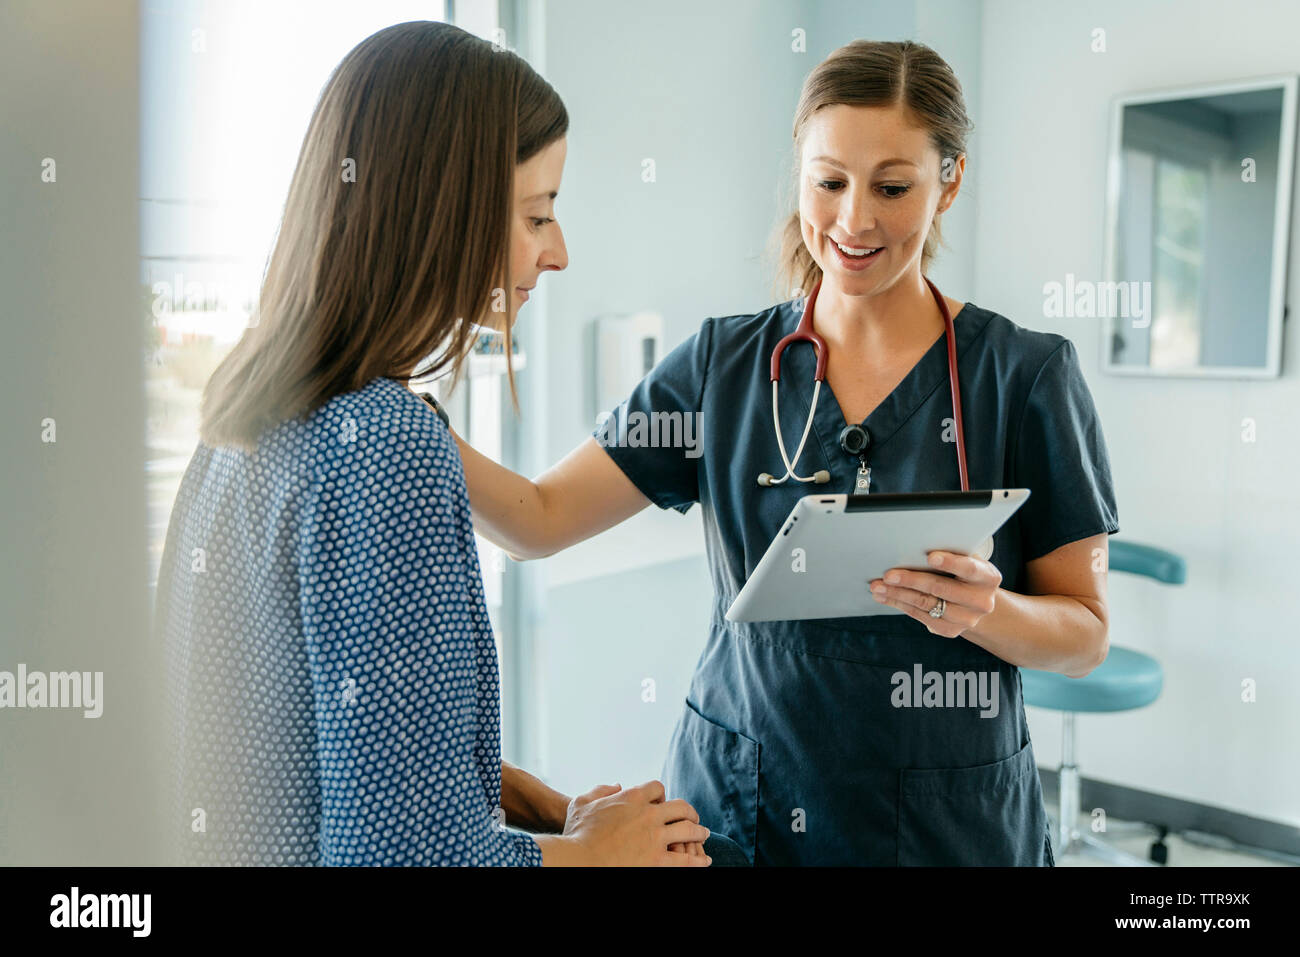 Medico donna consolante mentre mostra computer tablet in medical sala esame Foto Stock